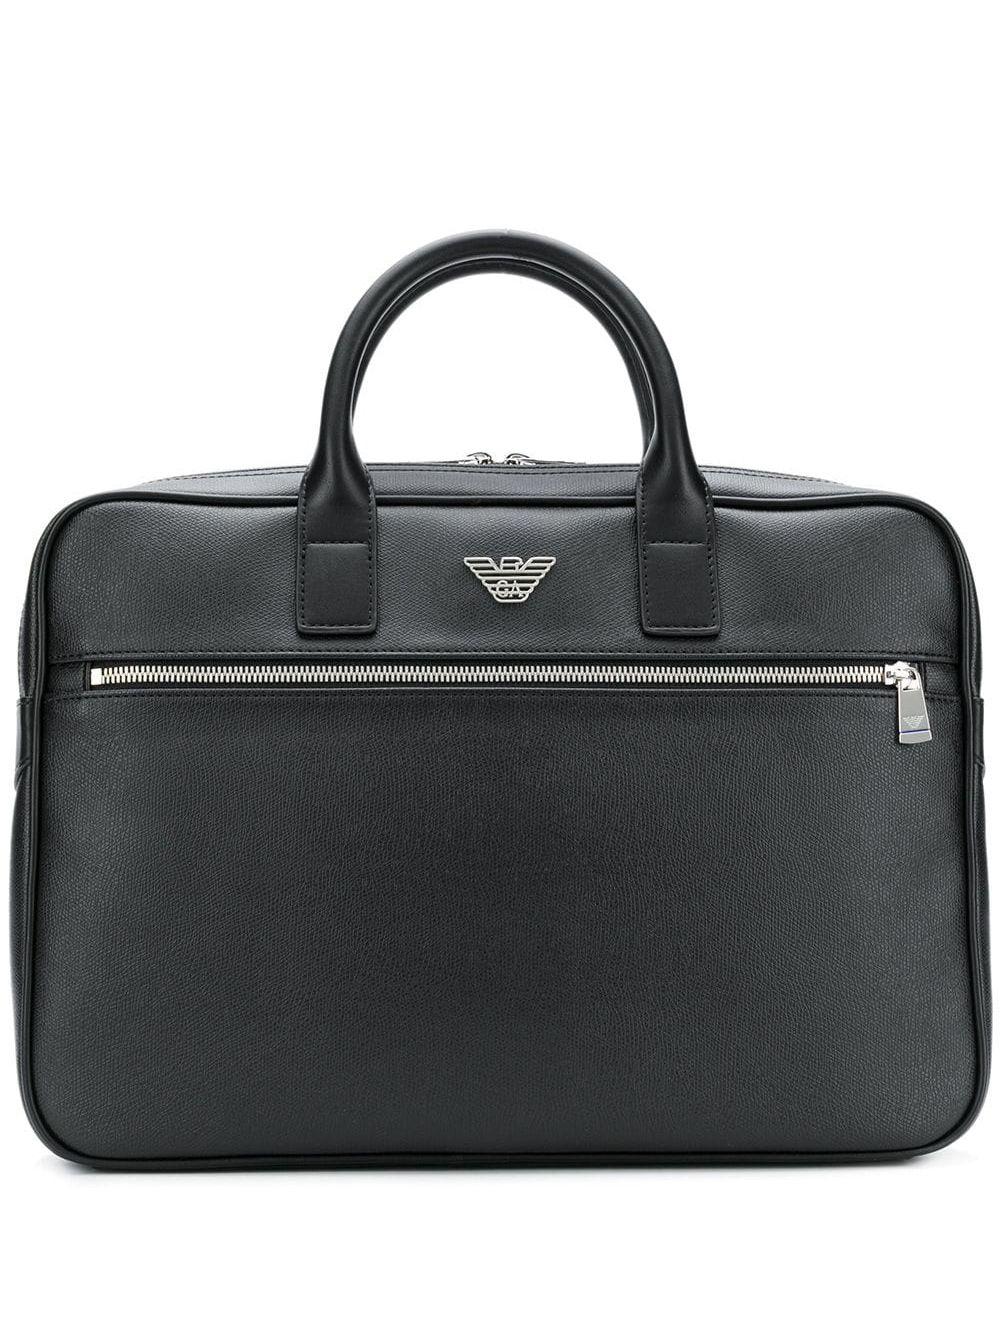 Emporio Armani Synthetic Logo Laptop Case in Black for Men - Lyst